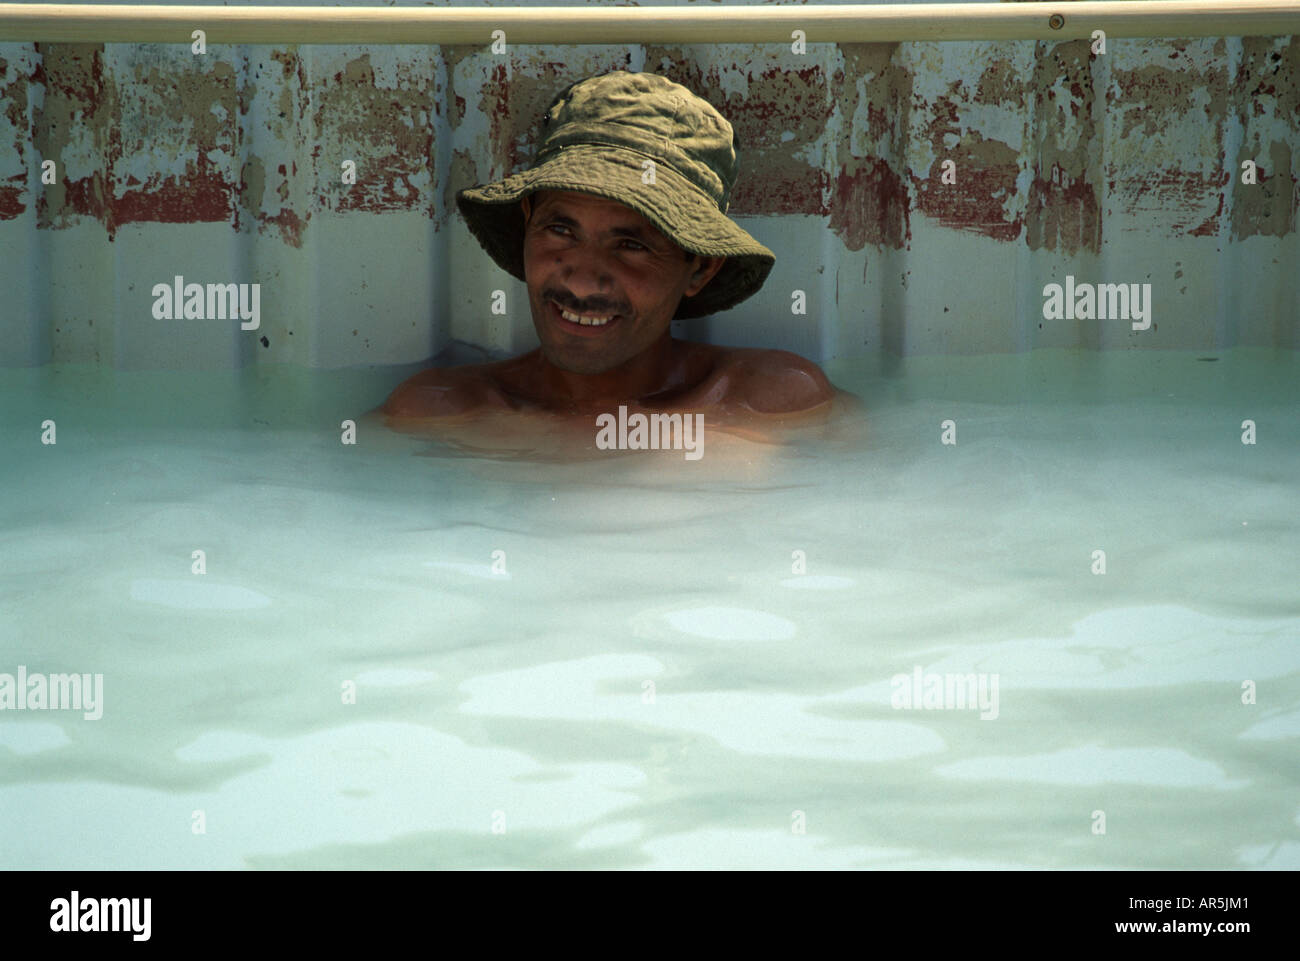 Palestinian man in a salt water pool, Dead Sea Israel Stock Photo